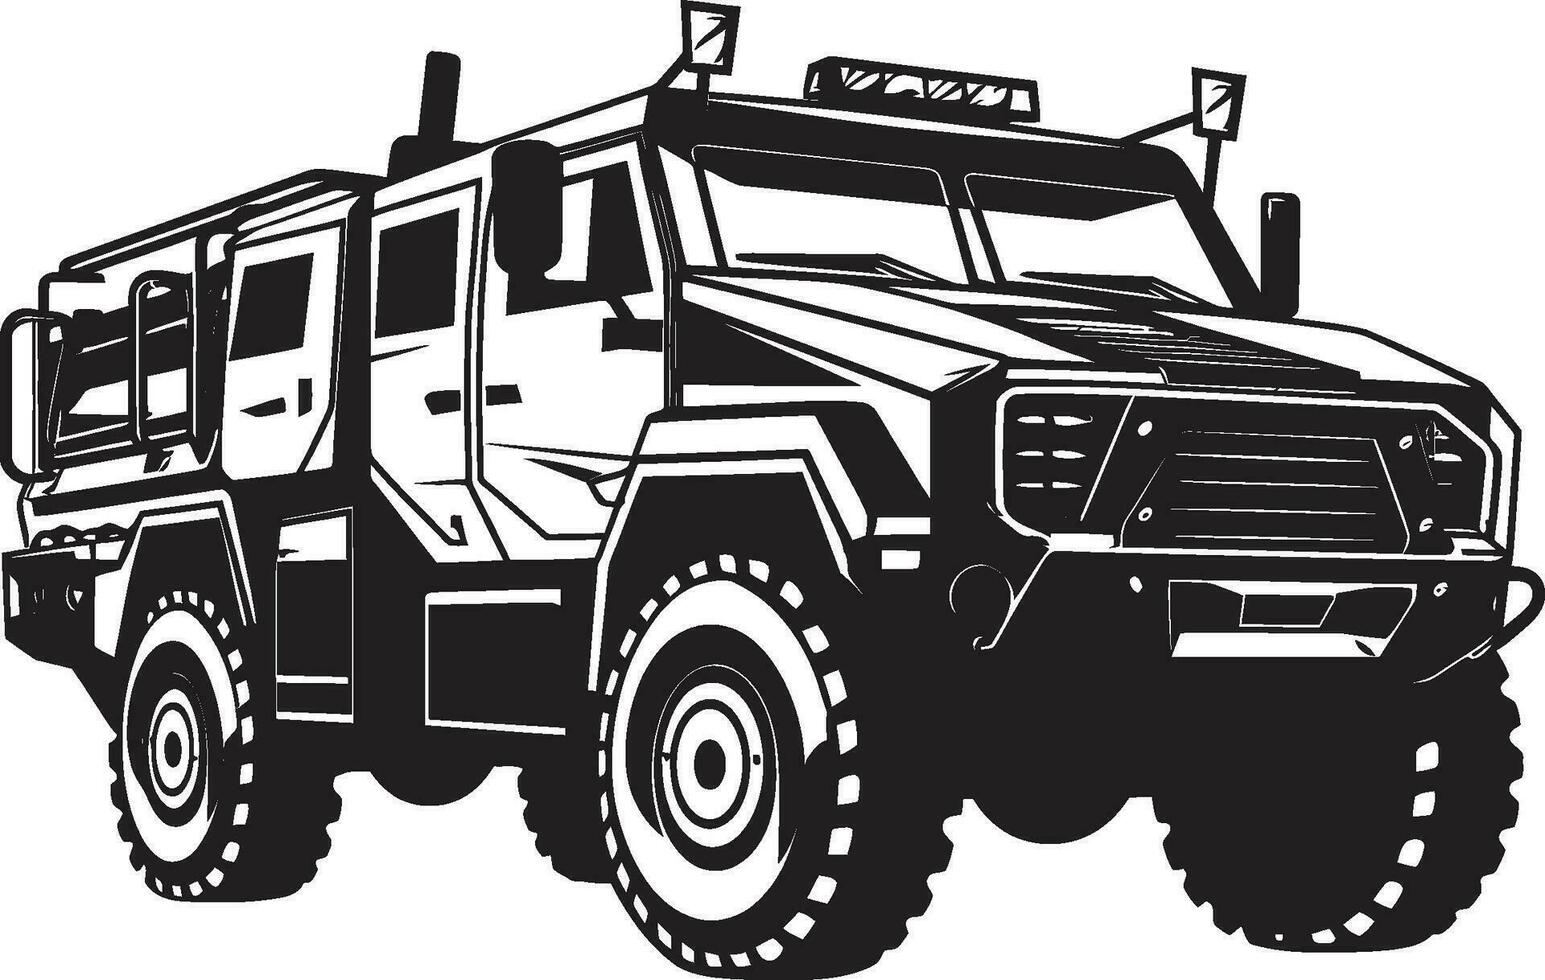 Defensive Expedition Militär- Fahrzeug Symbol Krieger s Reiten schwarz Heer 4x4 Logo vektor